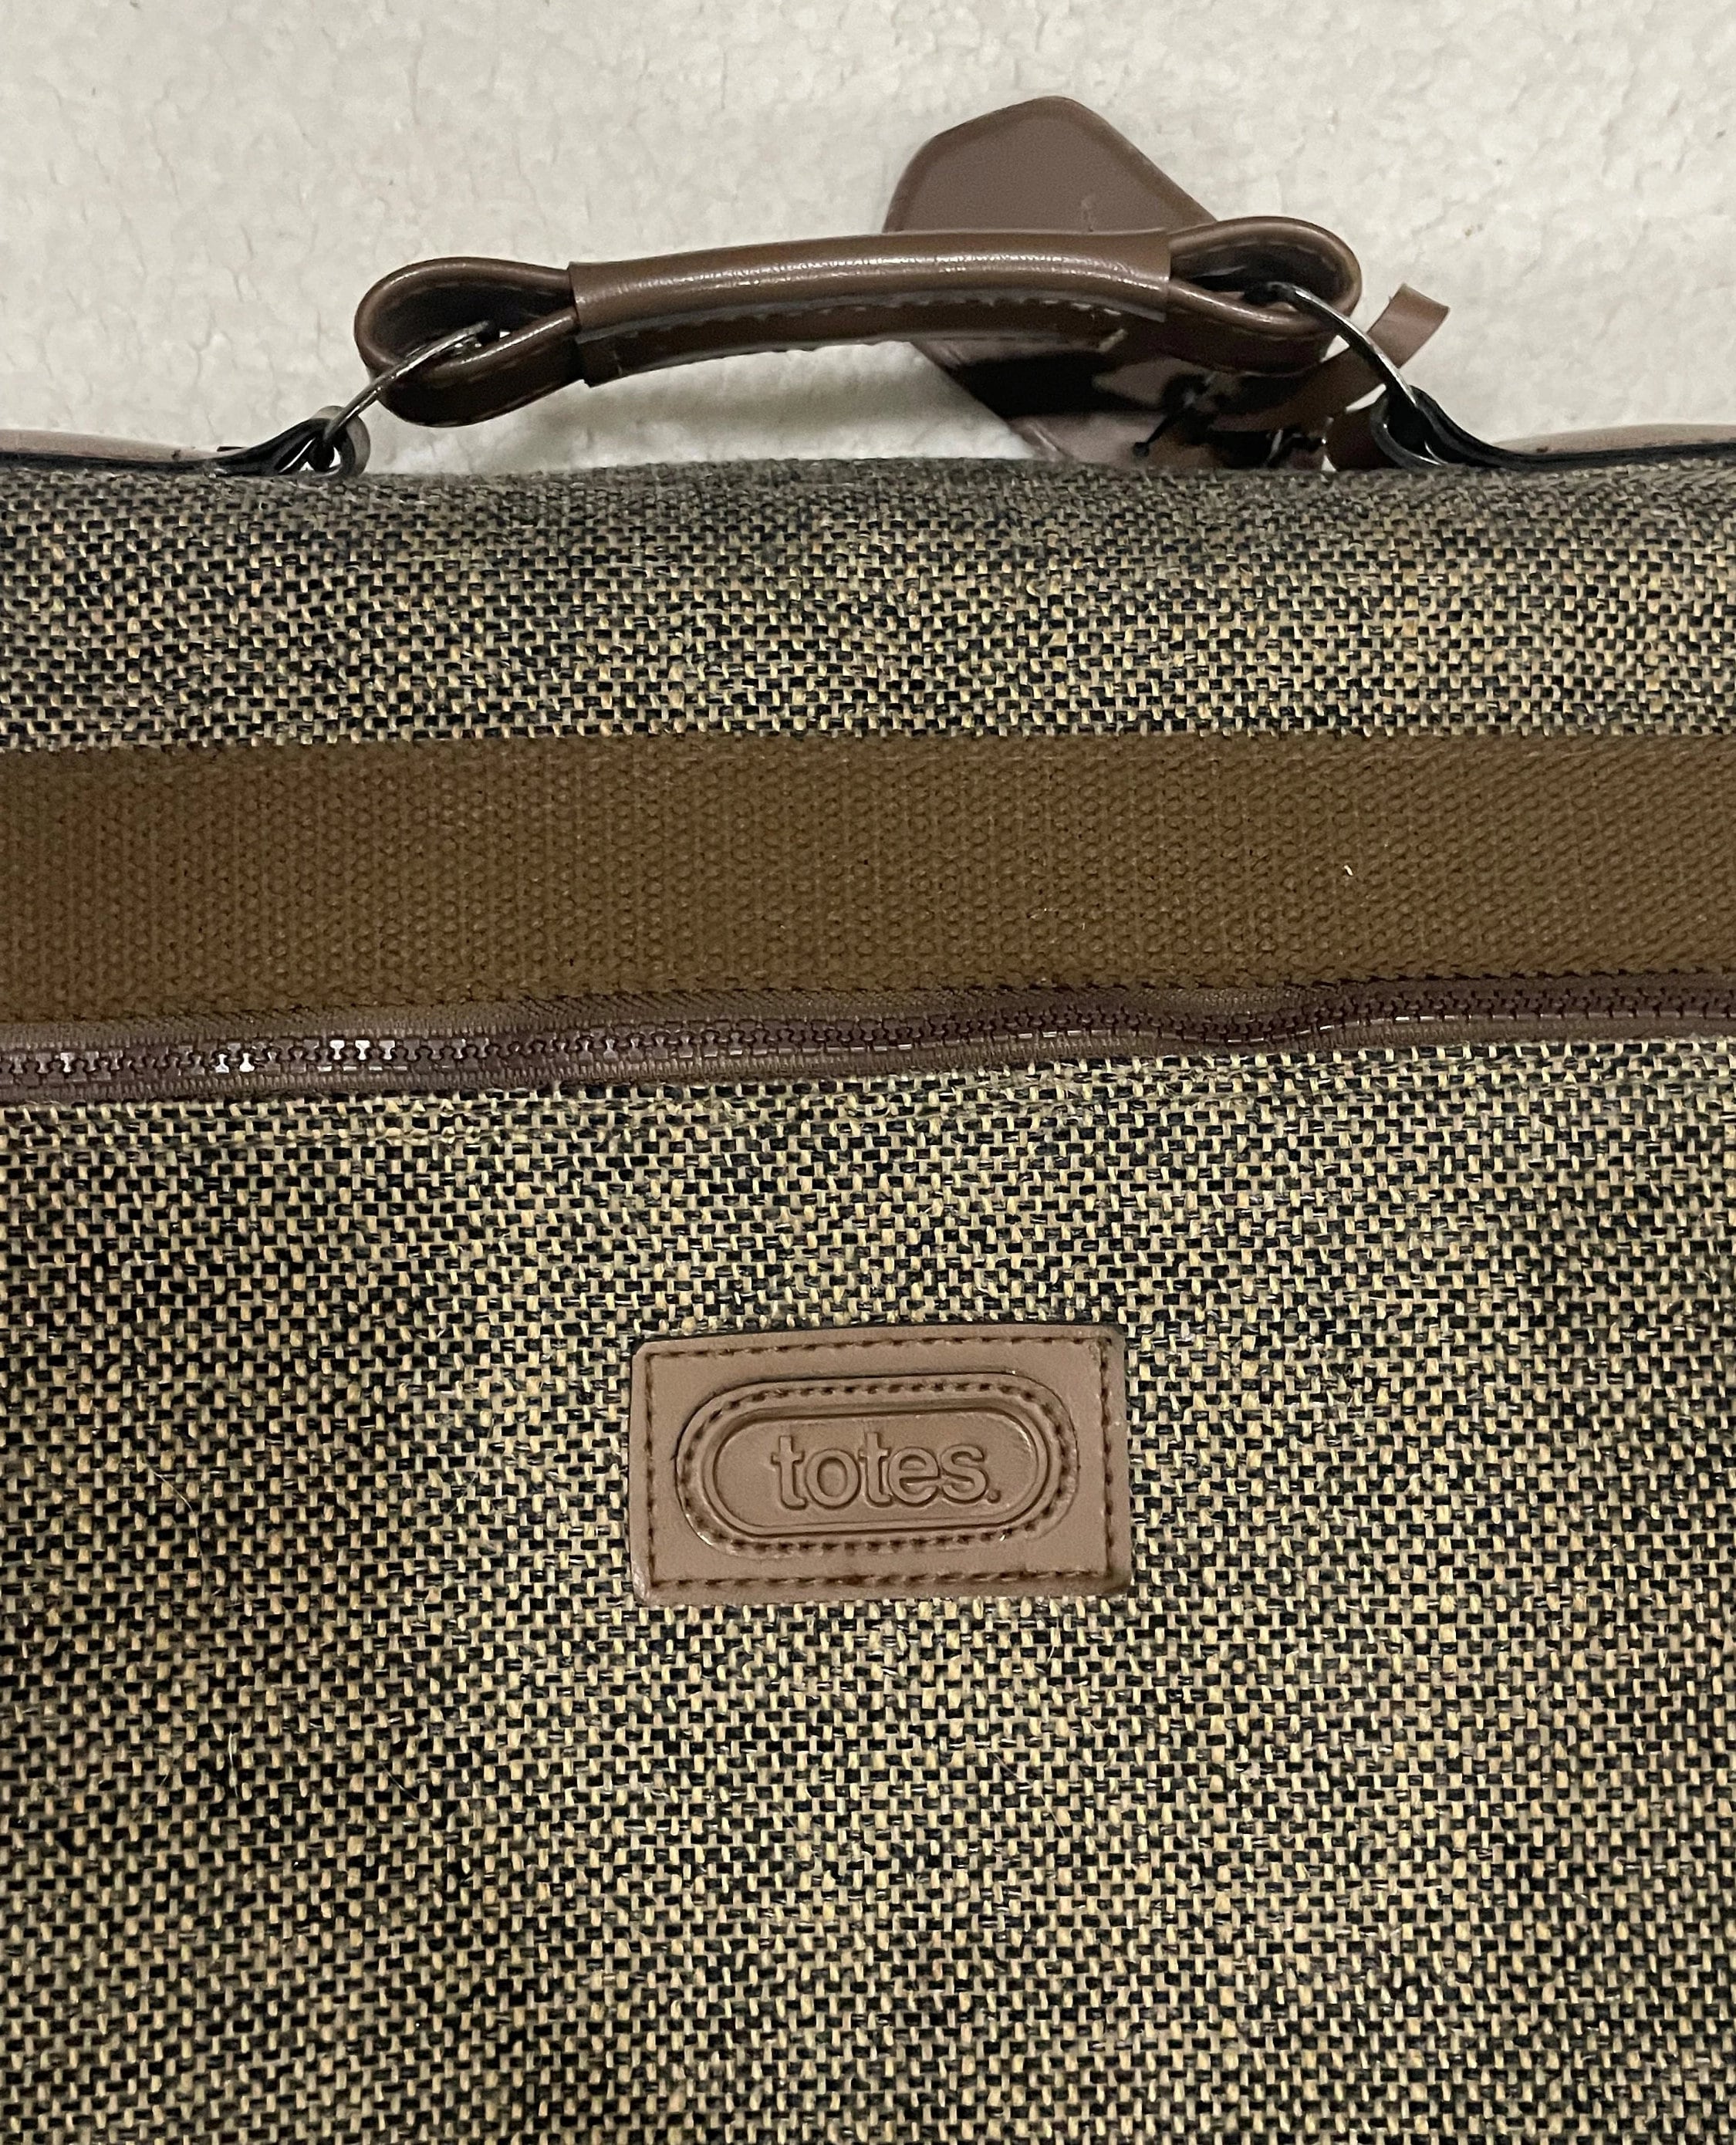 Vintage Louis Vuitton Style Garment Bag Luggage, circa 1970 at